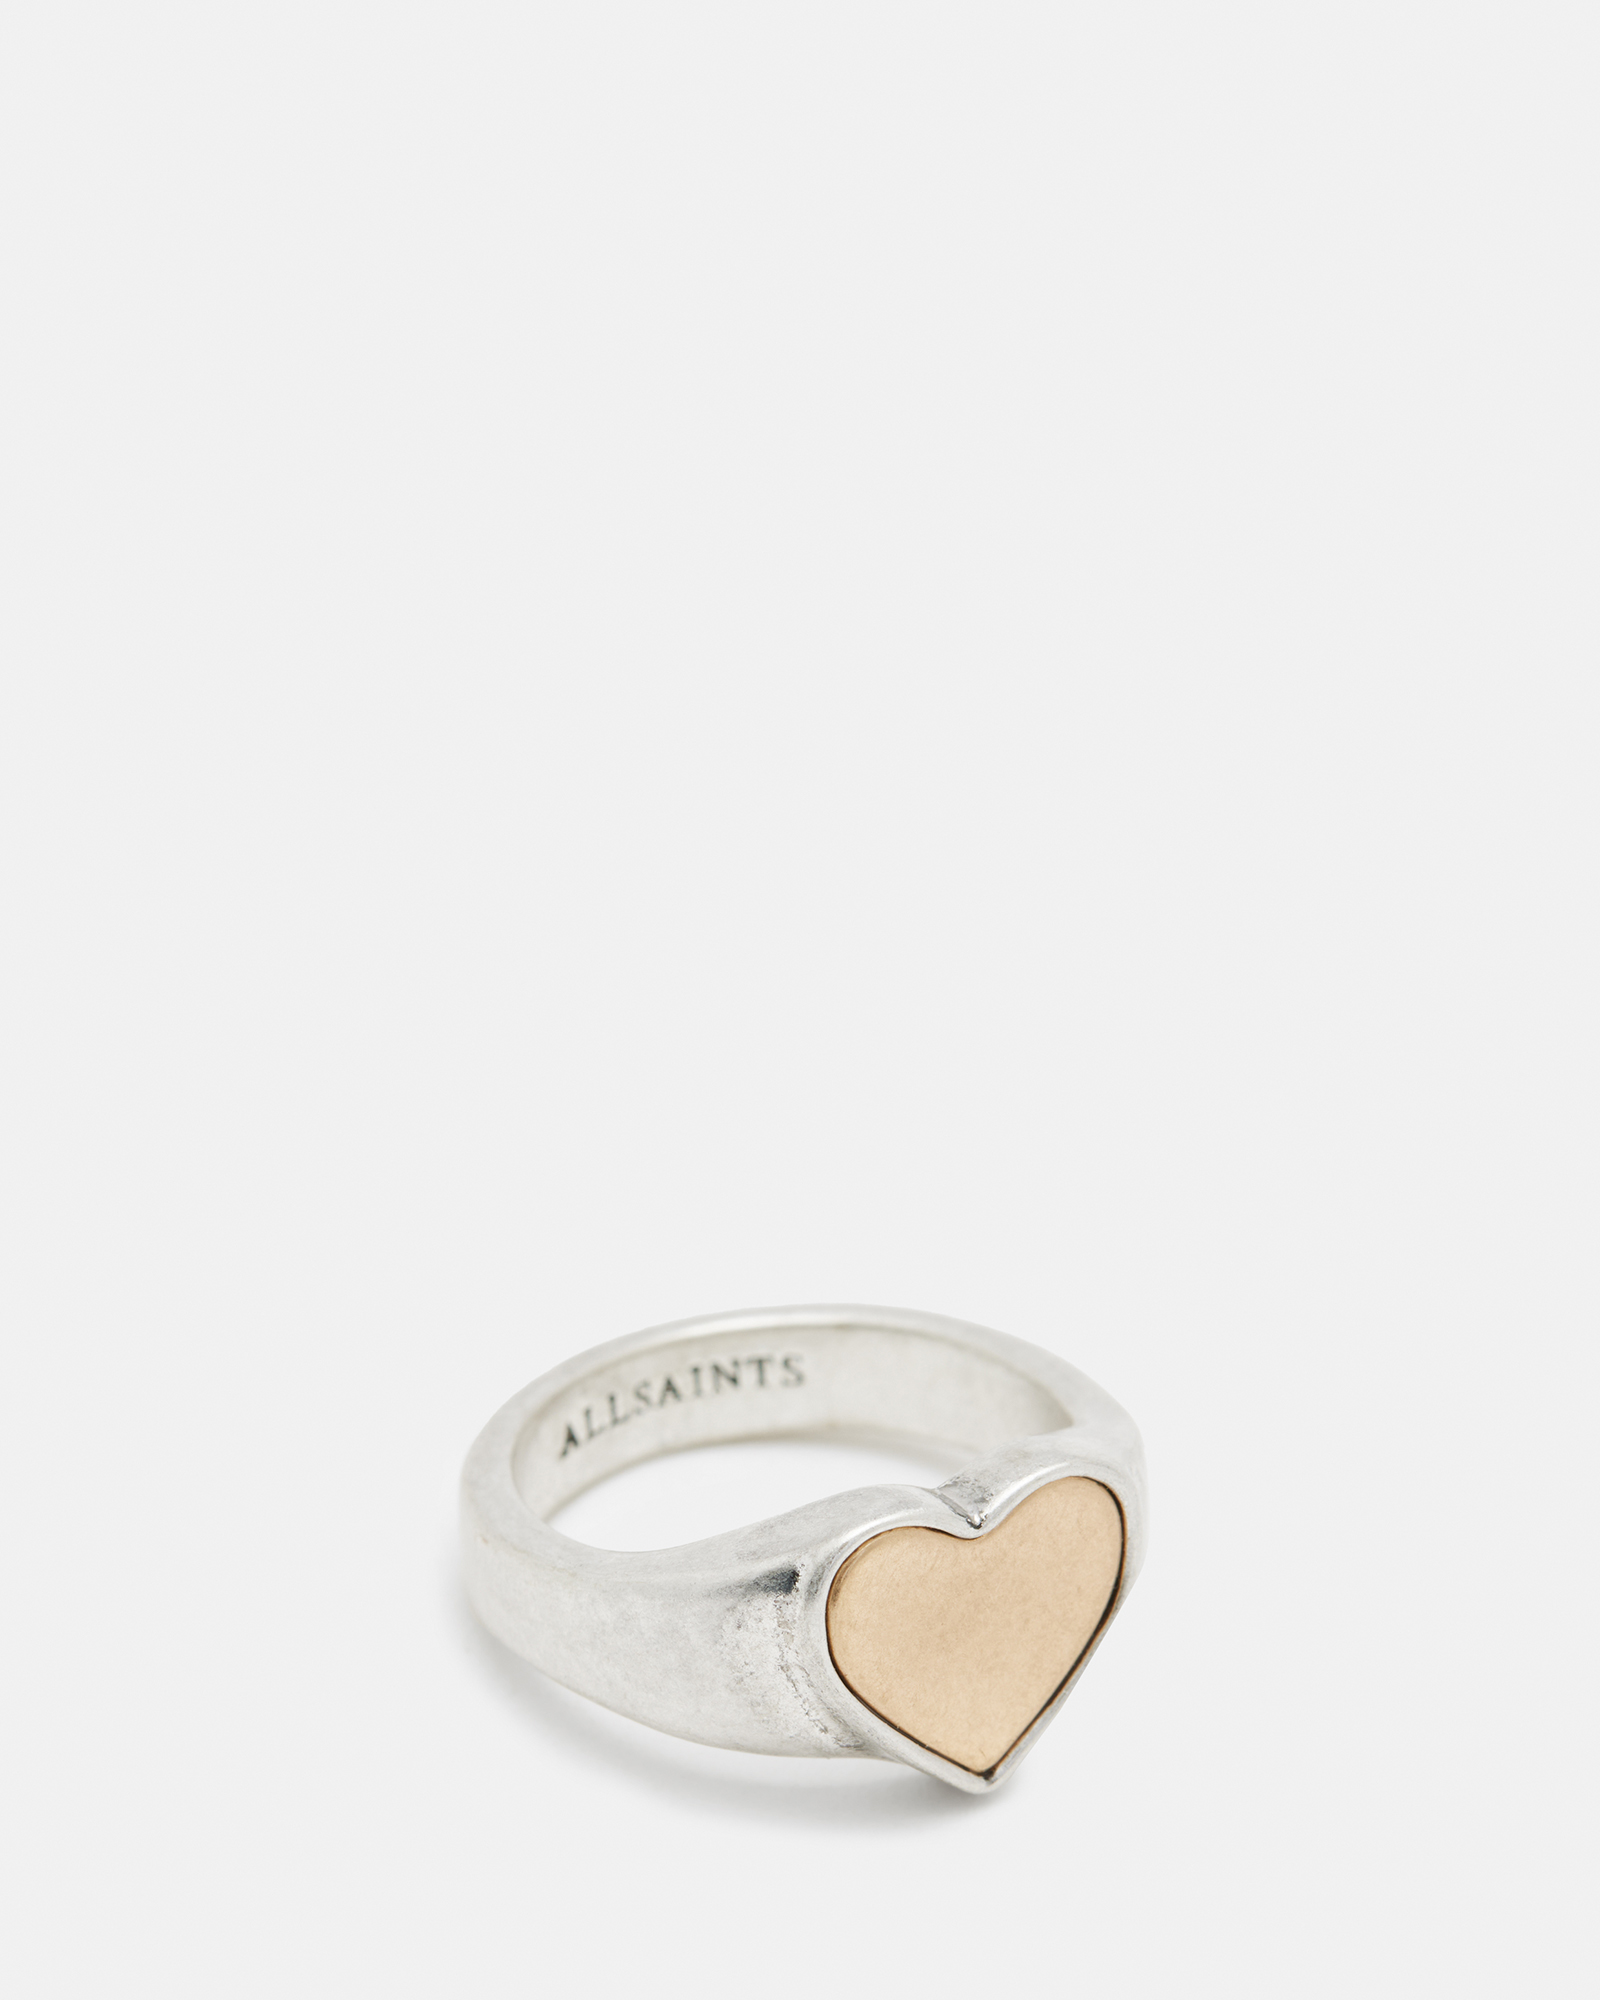 Allsaints Obi Two Tone Heart Shaped Ring In Wrm Bras/wrm Slver